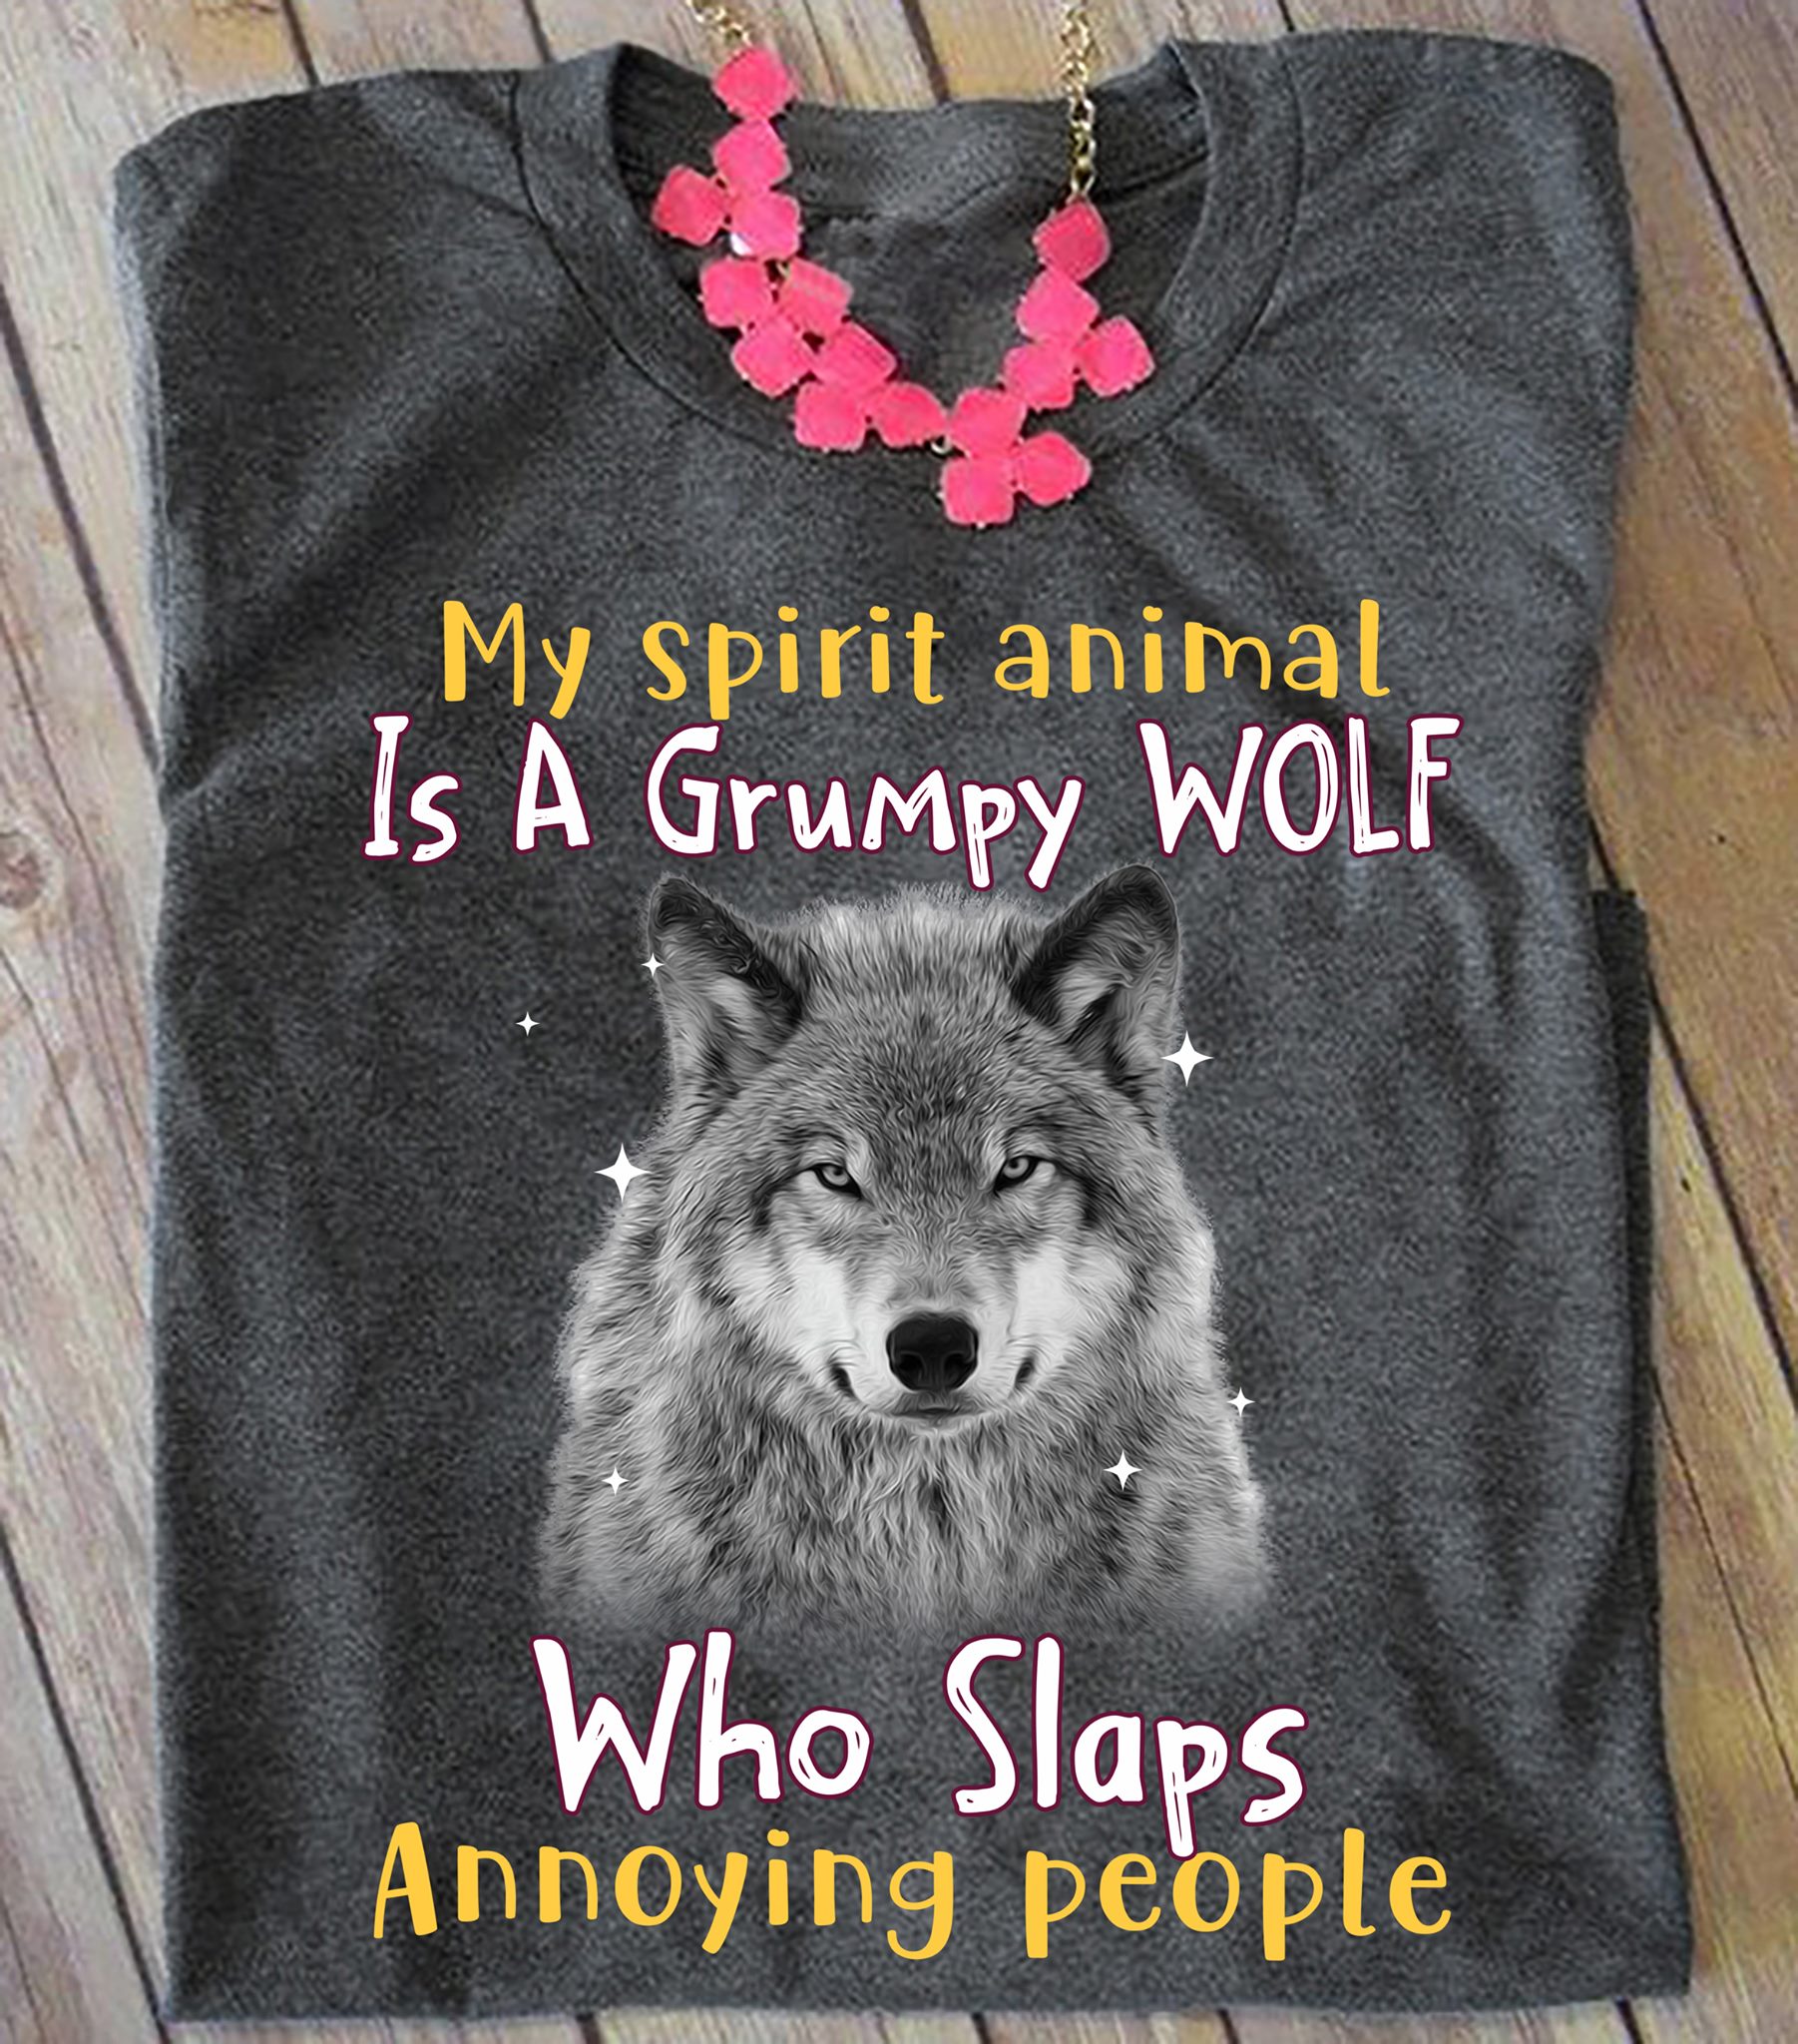 My spirit animal is a grumpy wolf who slaps annoying people